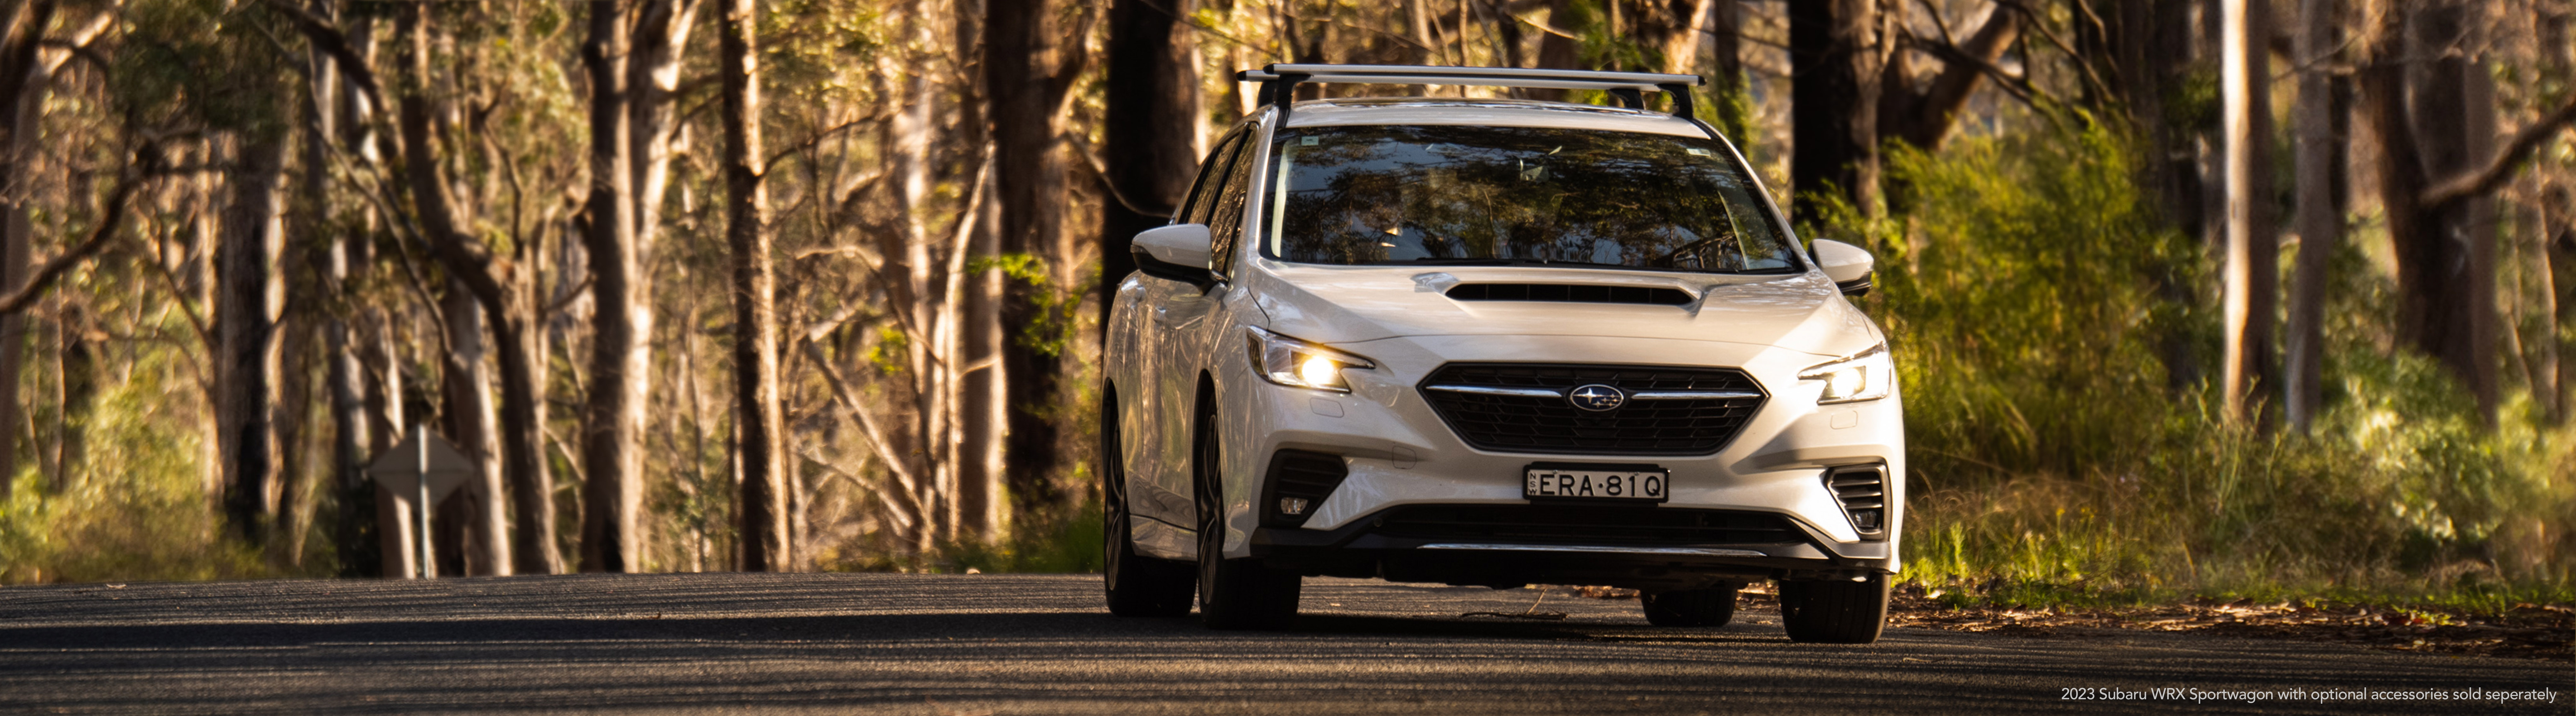 What technology can I find in the Subaru WRX Sportswagon? | Subaru Australia